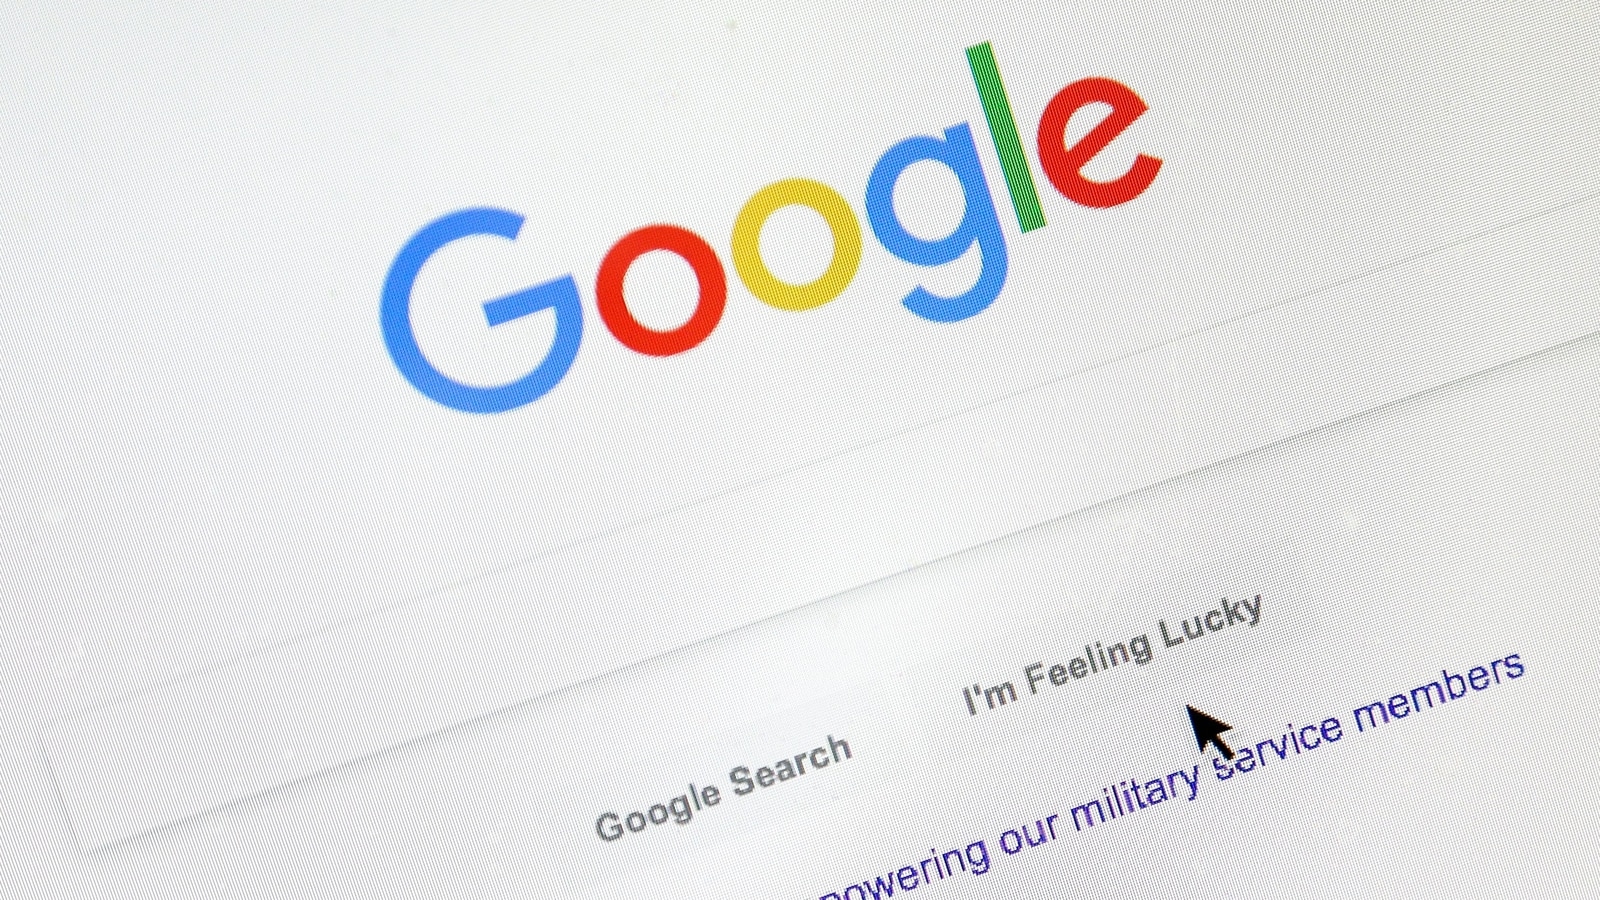 Google Search Is Like ‘Cigarettes or Drugs,’ Executive Said